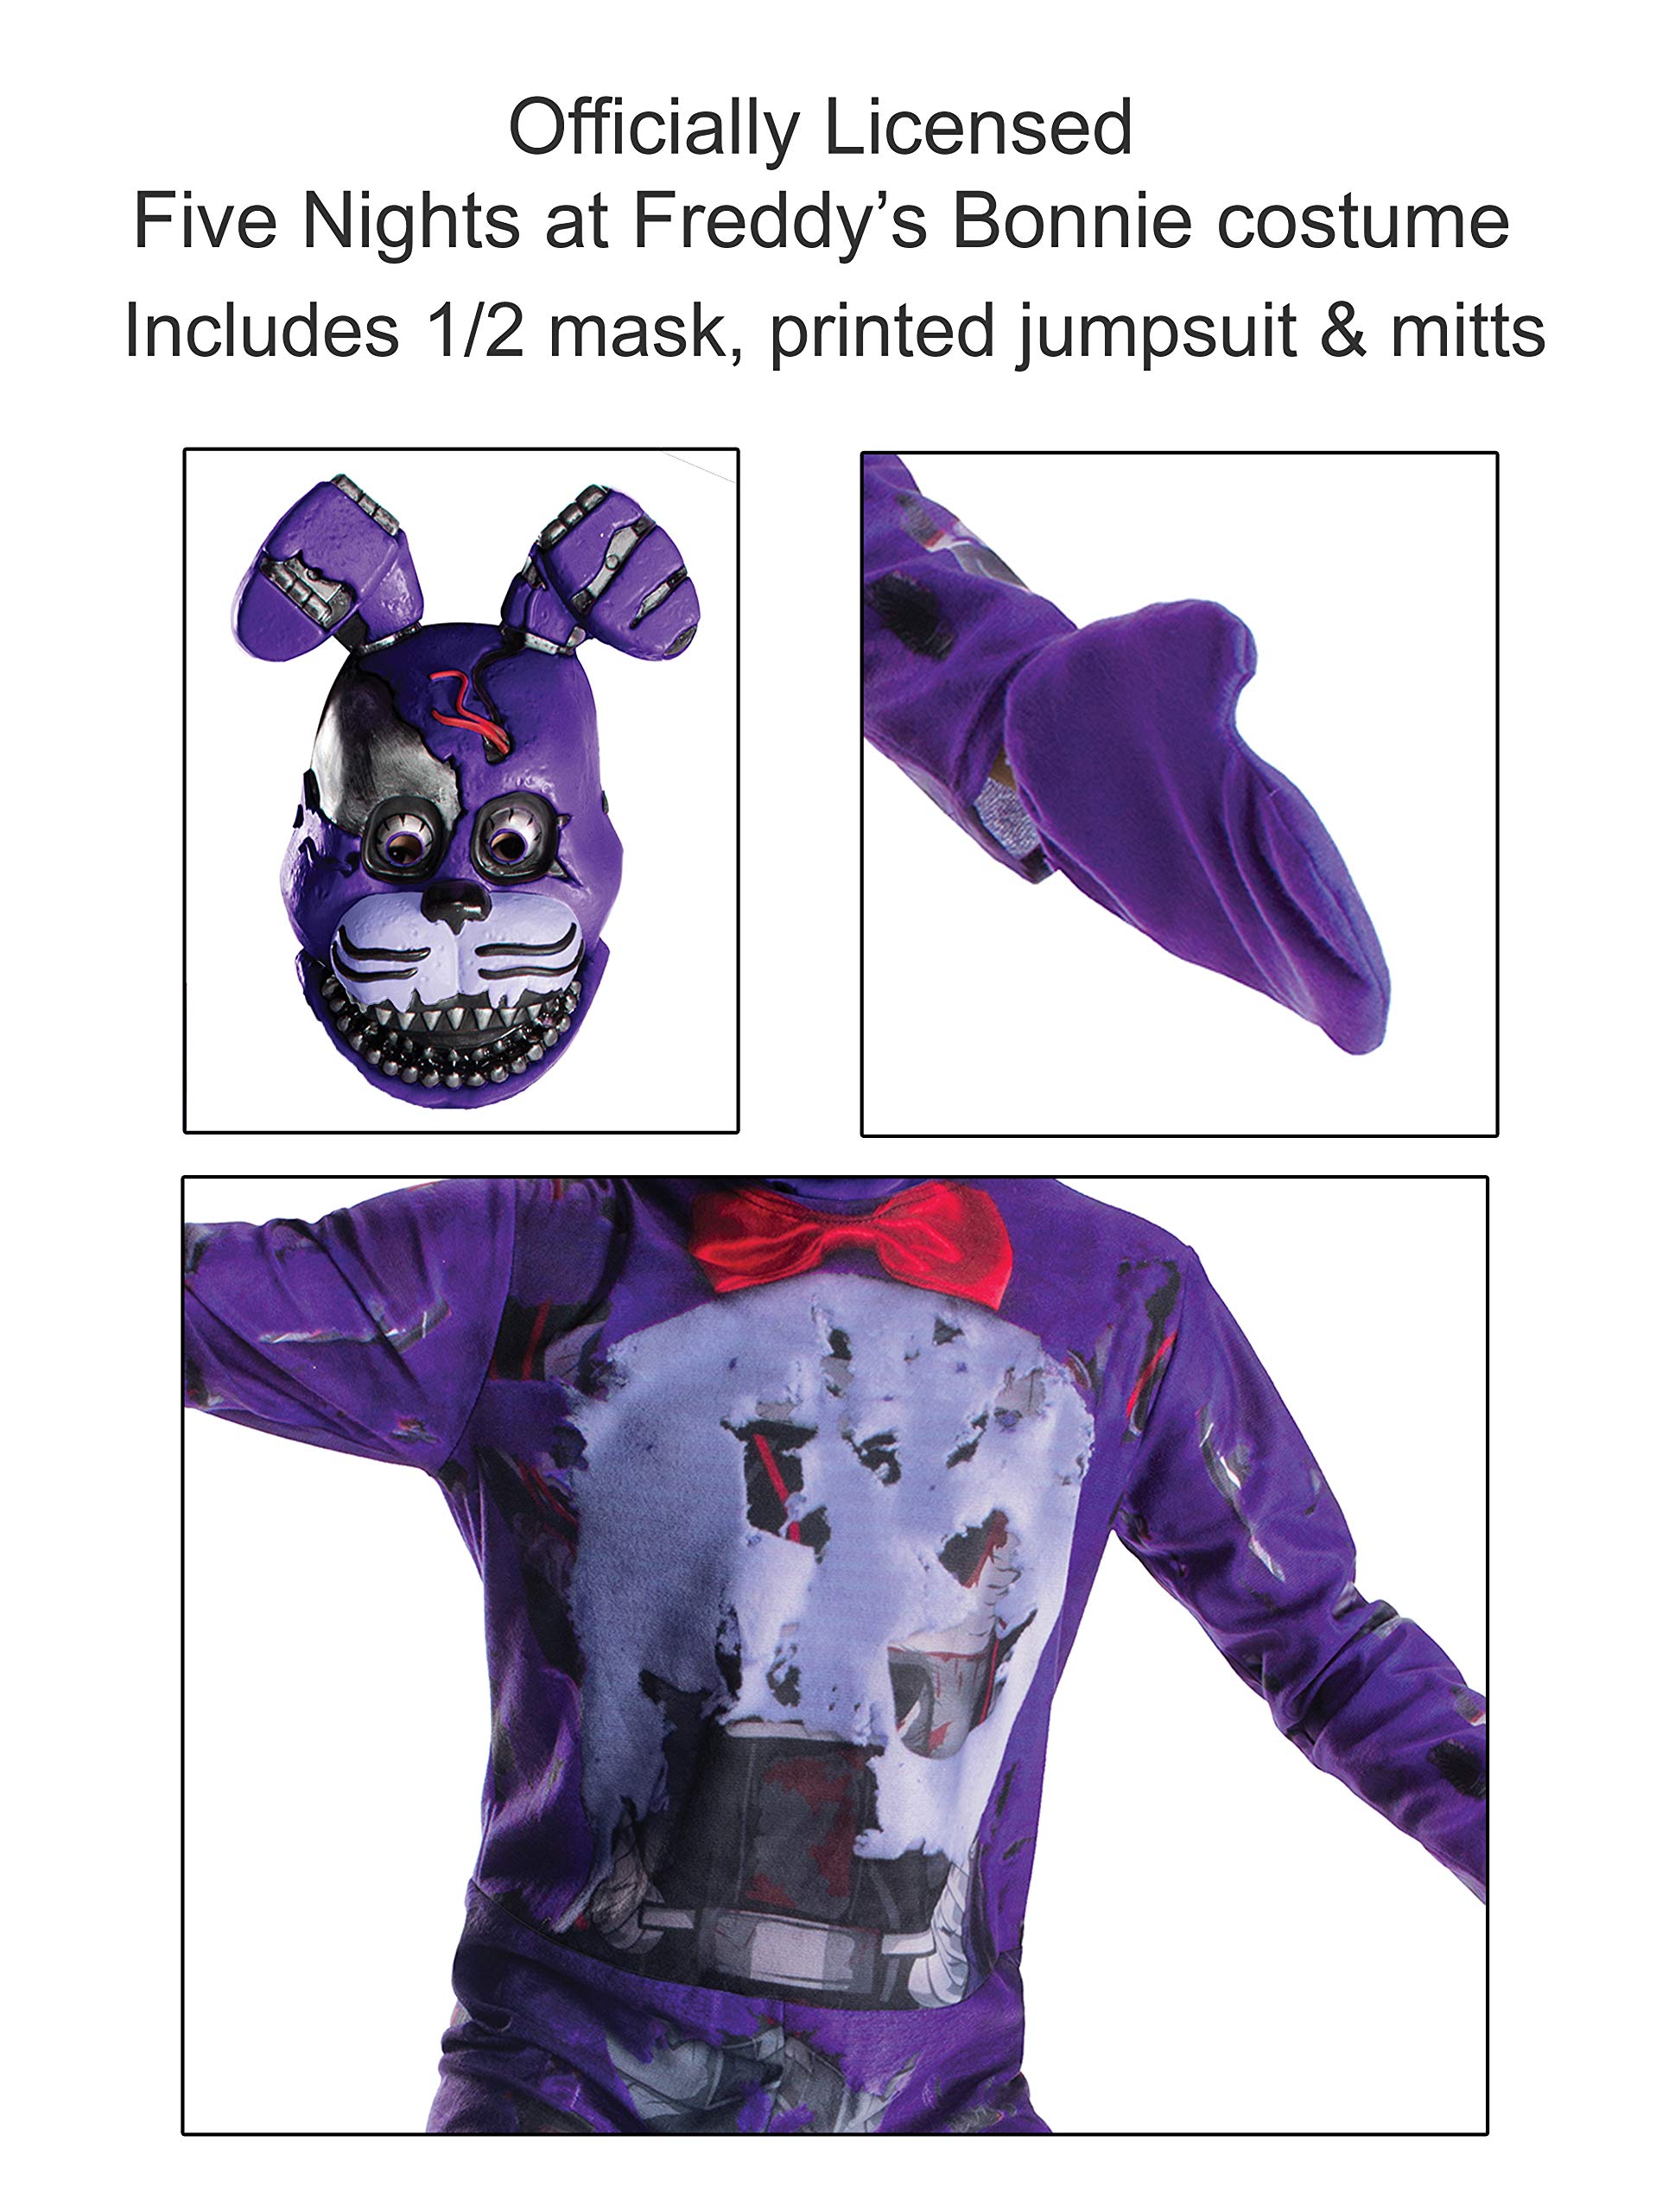 Rubie's Boy's Five Nights at Freddy's Nightmare Bonnie The Rabbit Costume, Medium